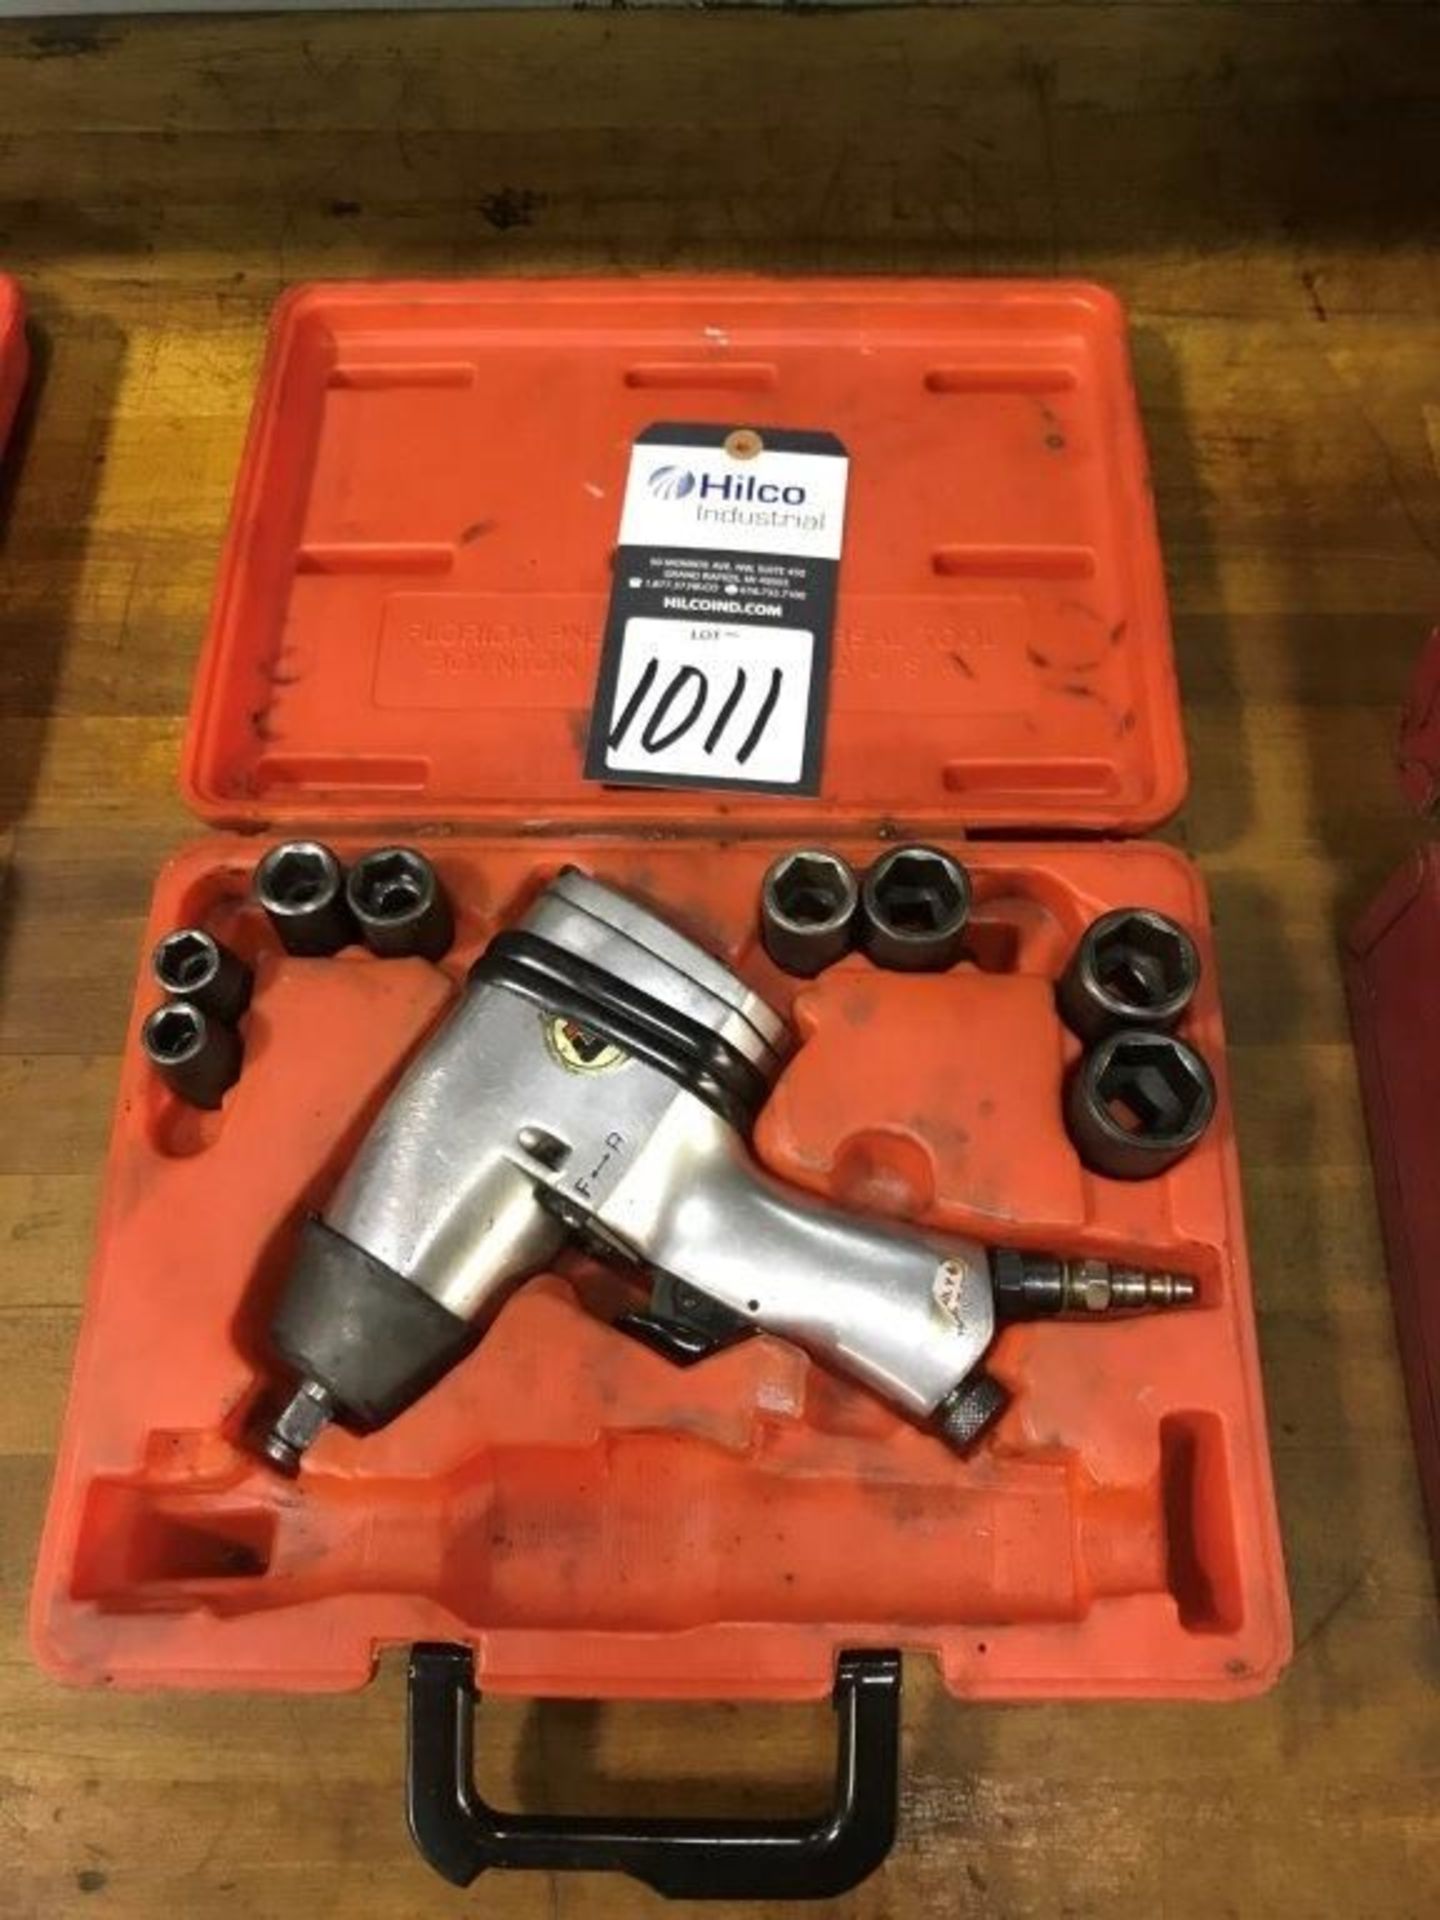 Universal Tool Model UT-2210 1/2" Pneumatic Impact Wrench - Image 2 of 2